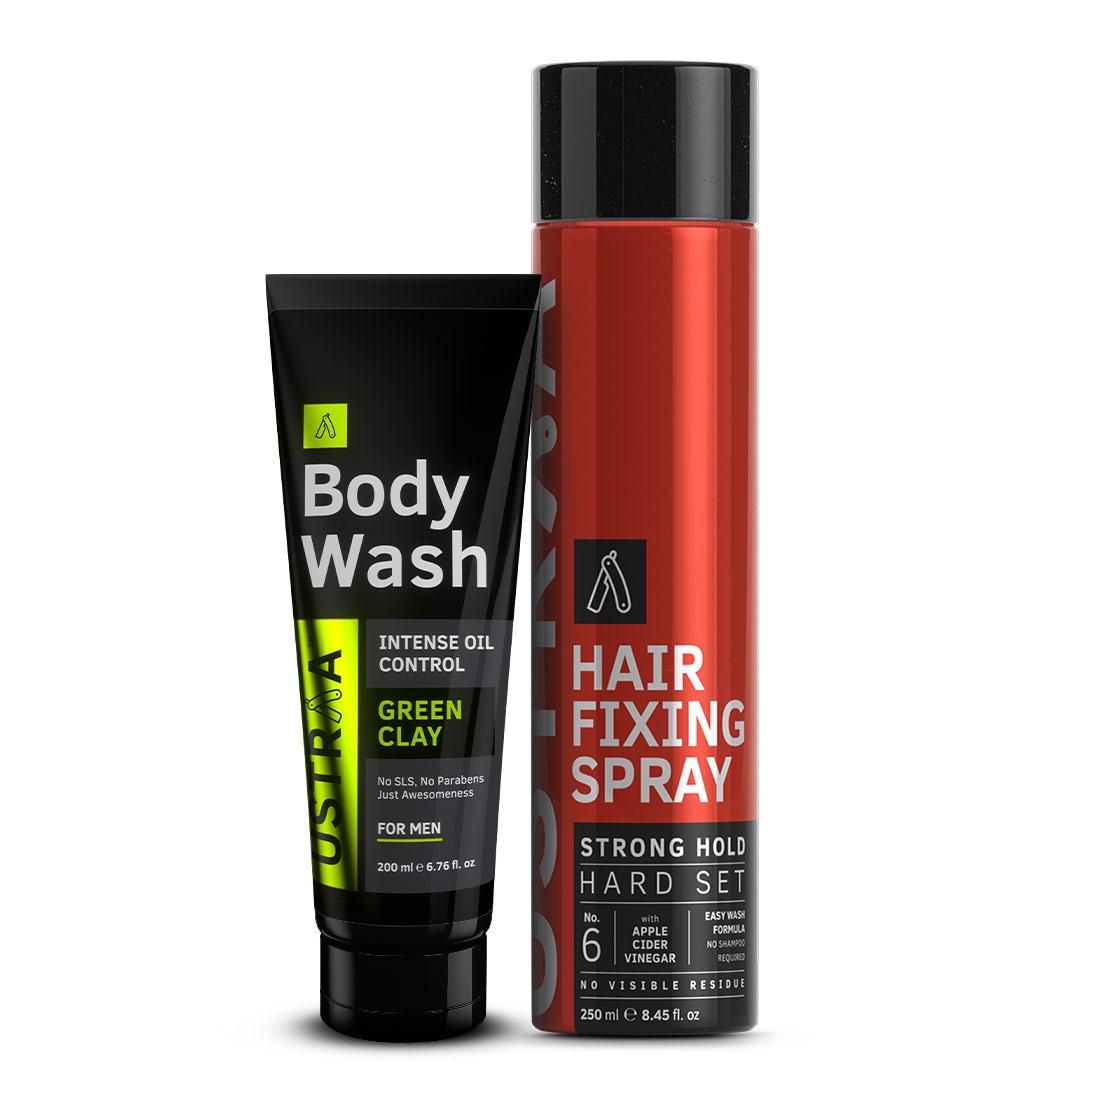 Body Wash (Green Clay) & Hair Fixing Spray